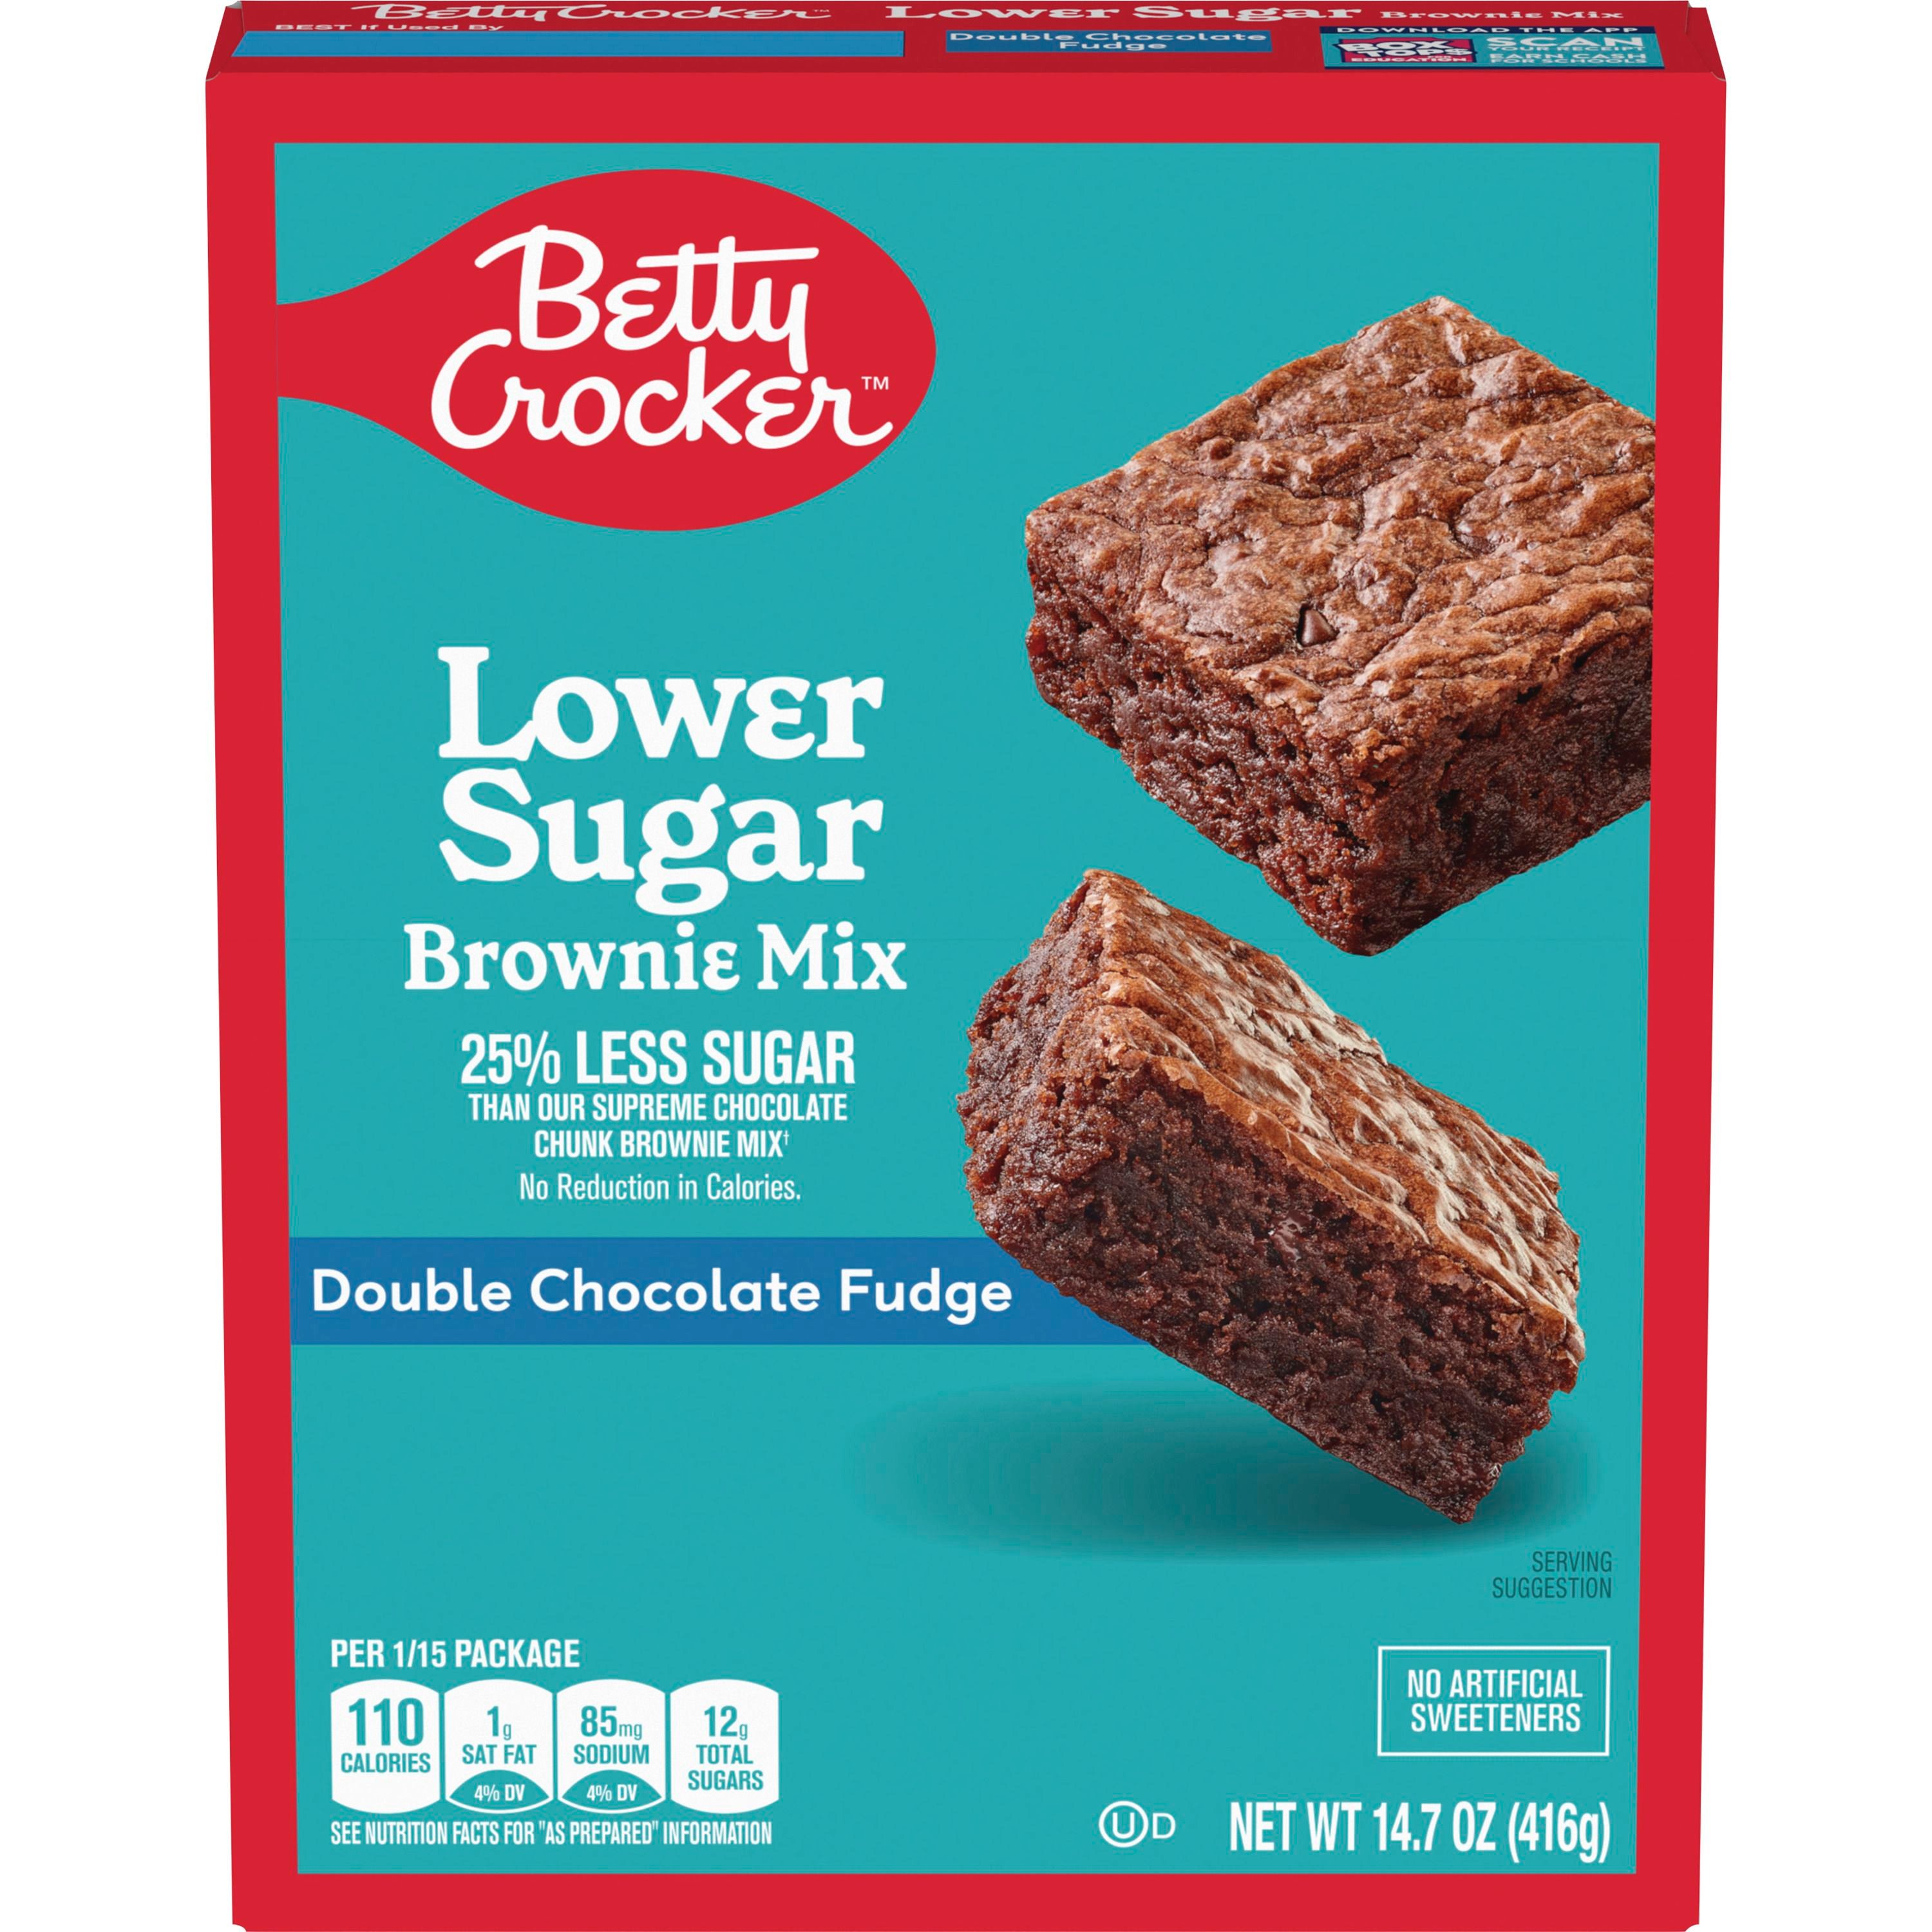 Betty Crocker Lower Sugar Brownie Mix, Double Chocolate Fudge, No Artificial Sweeteners, 14.7 oz - Front